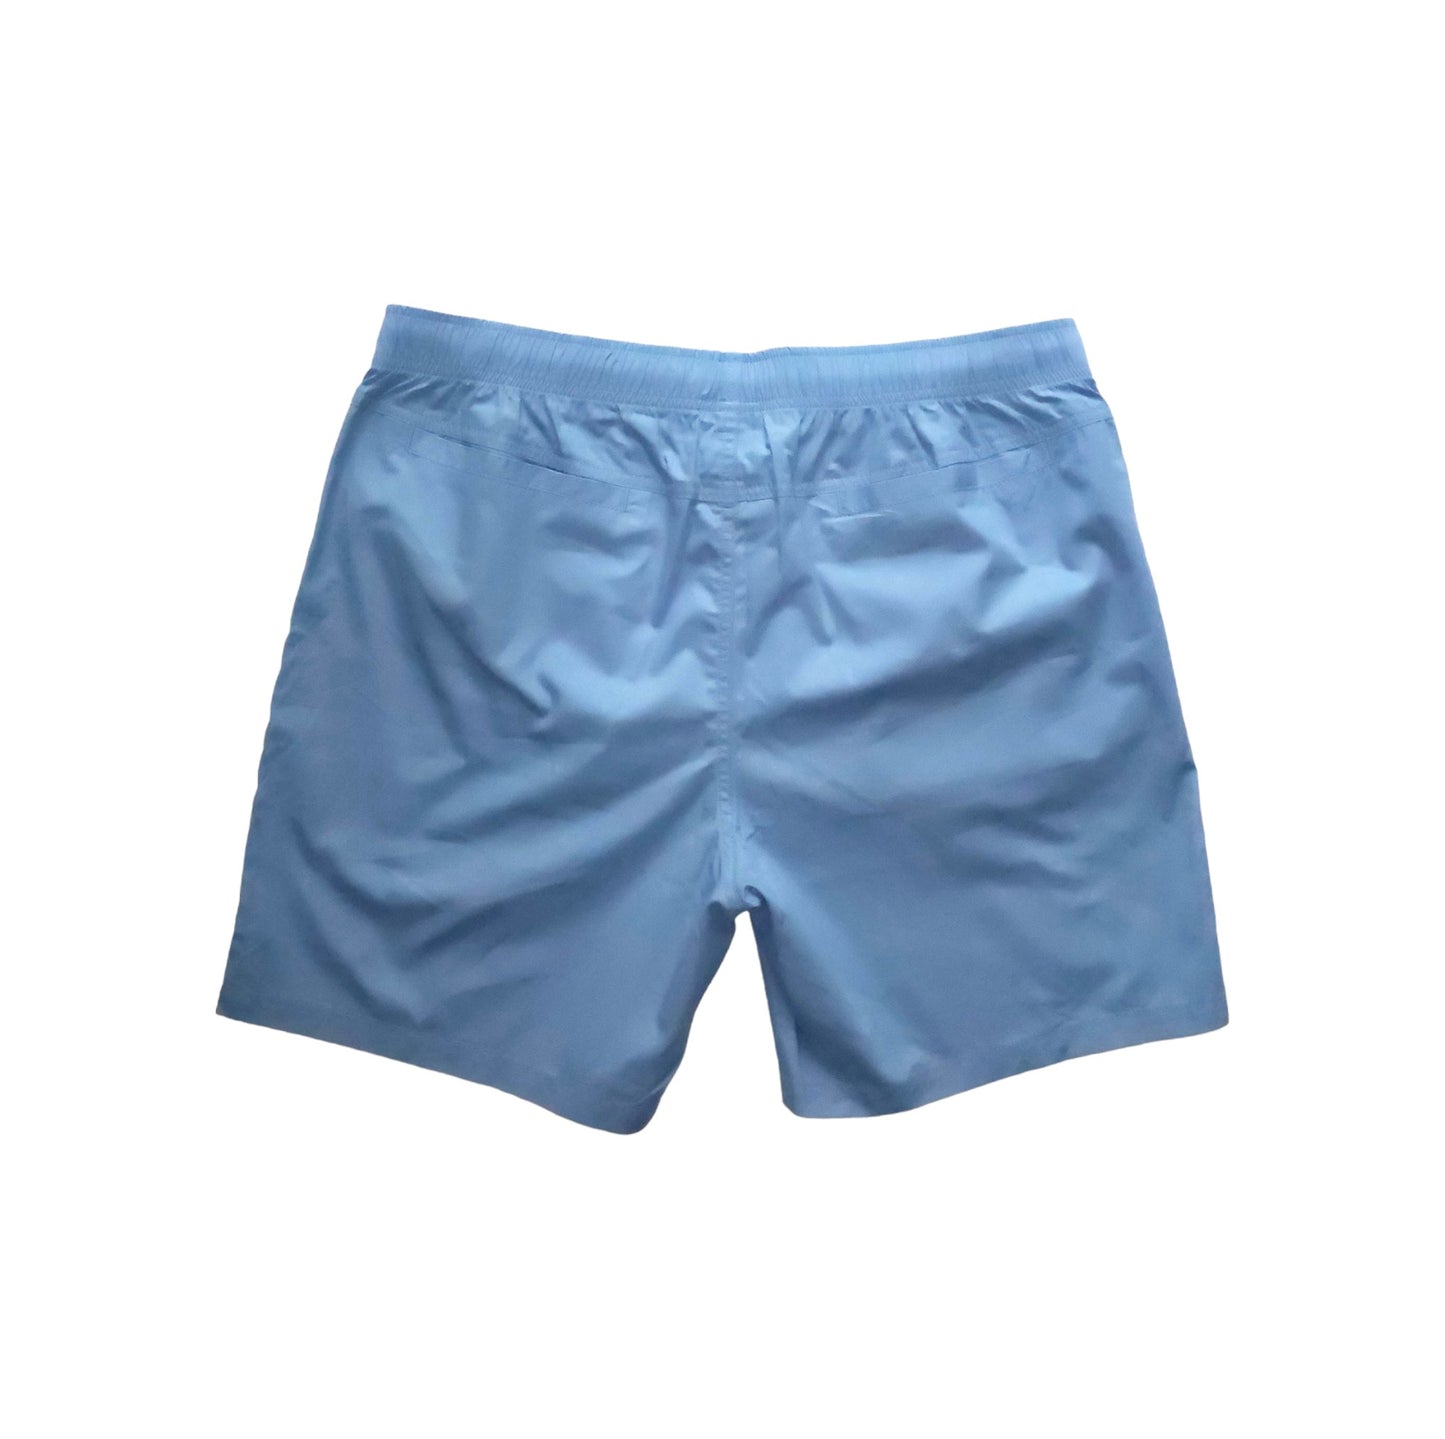 AKI x CHI - DAVI Shorts in Lake Blue